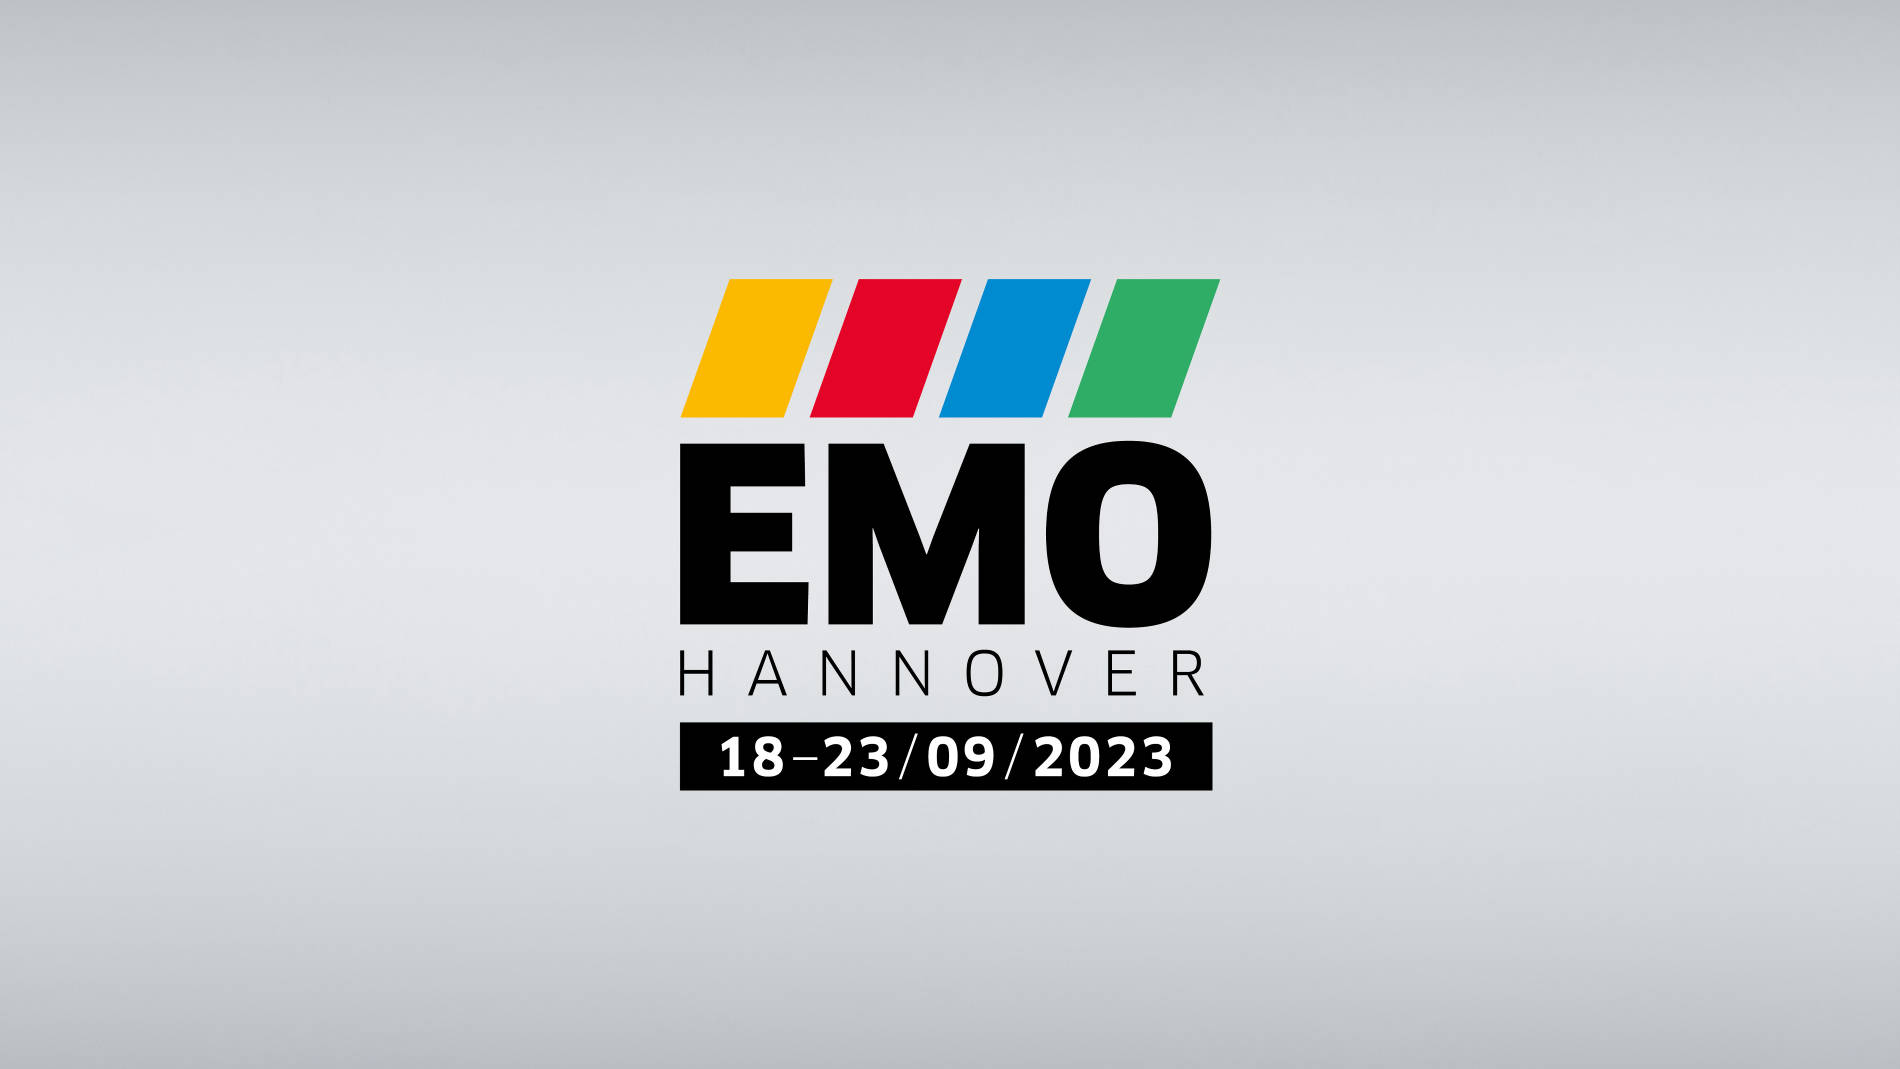 EMO Hannover 2023 - DMG MORI Events - EMO Hannover